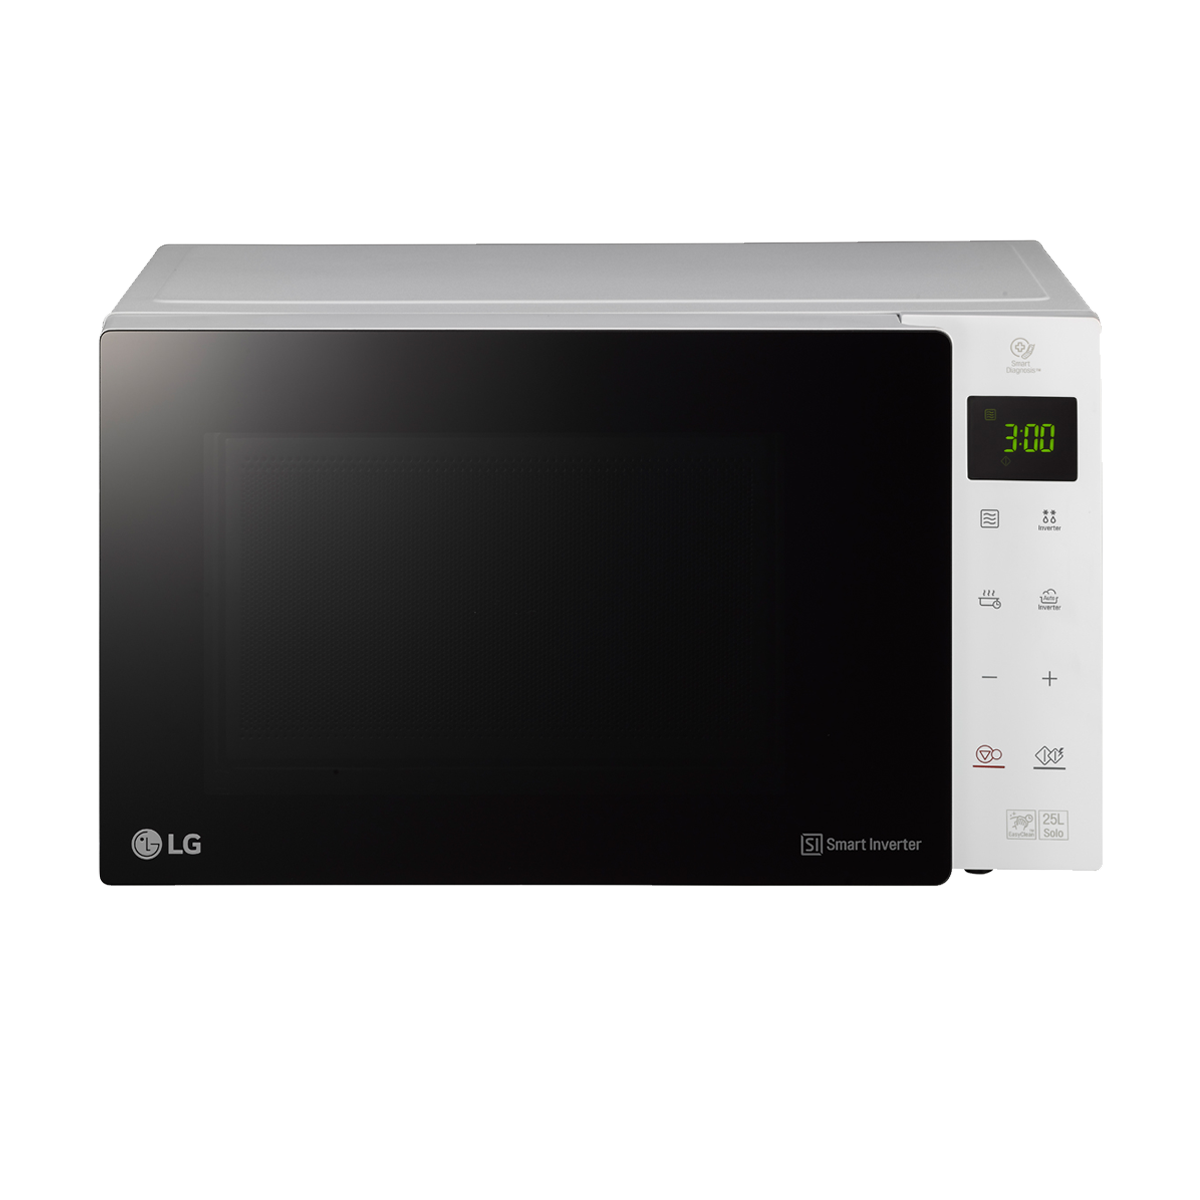 LG 25L Smart Inverter Neo Chef Microwave Oven